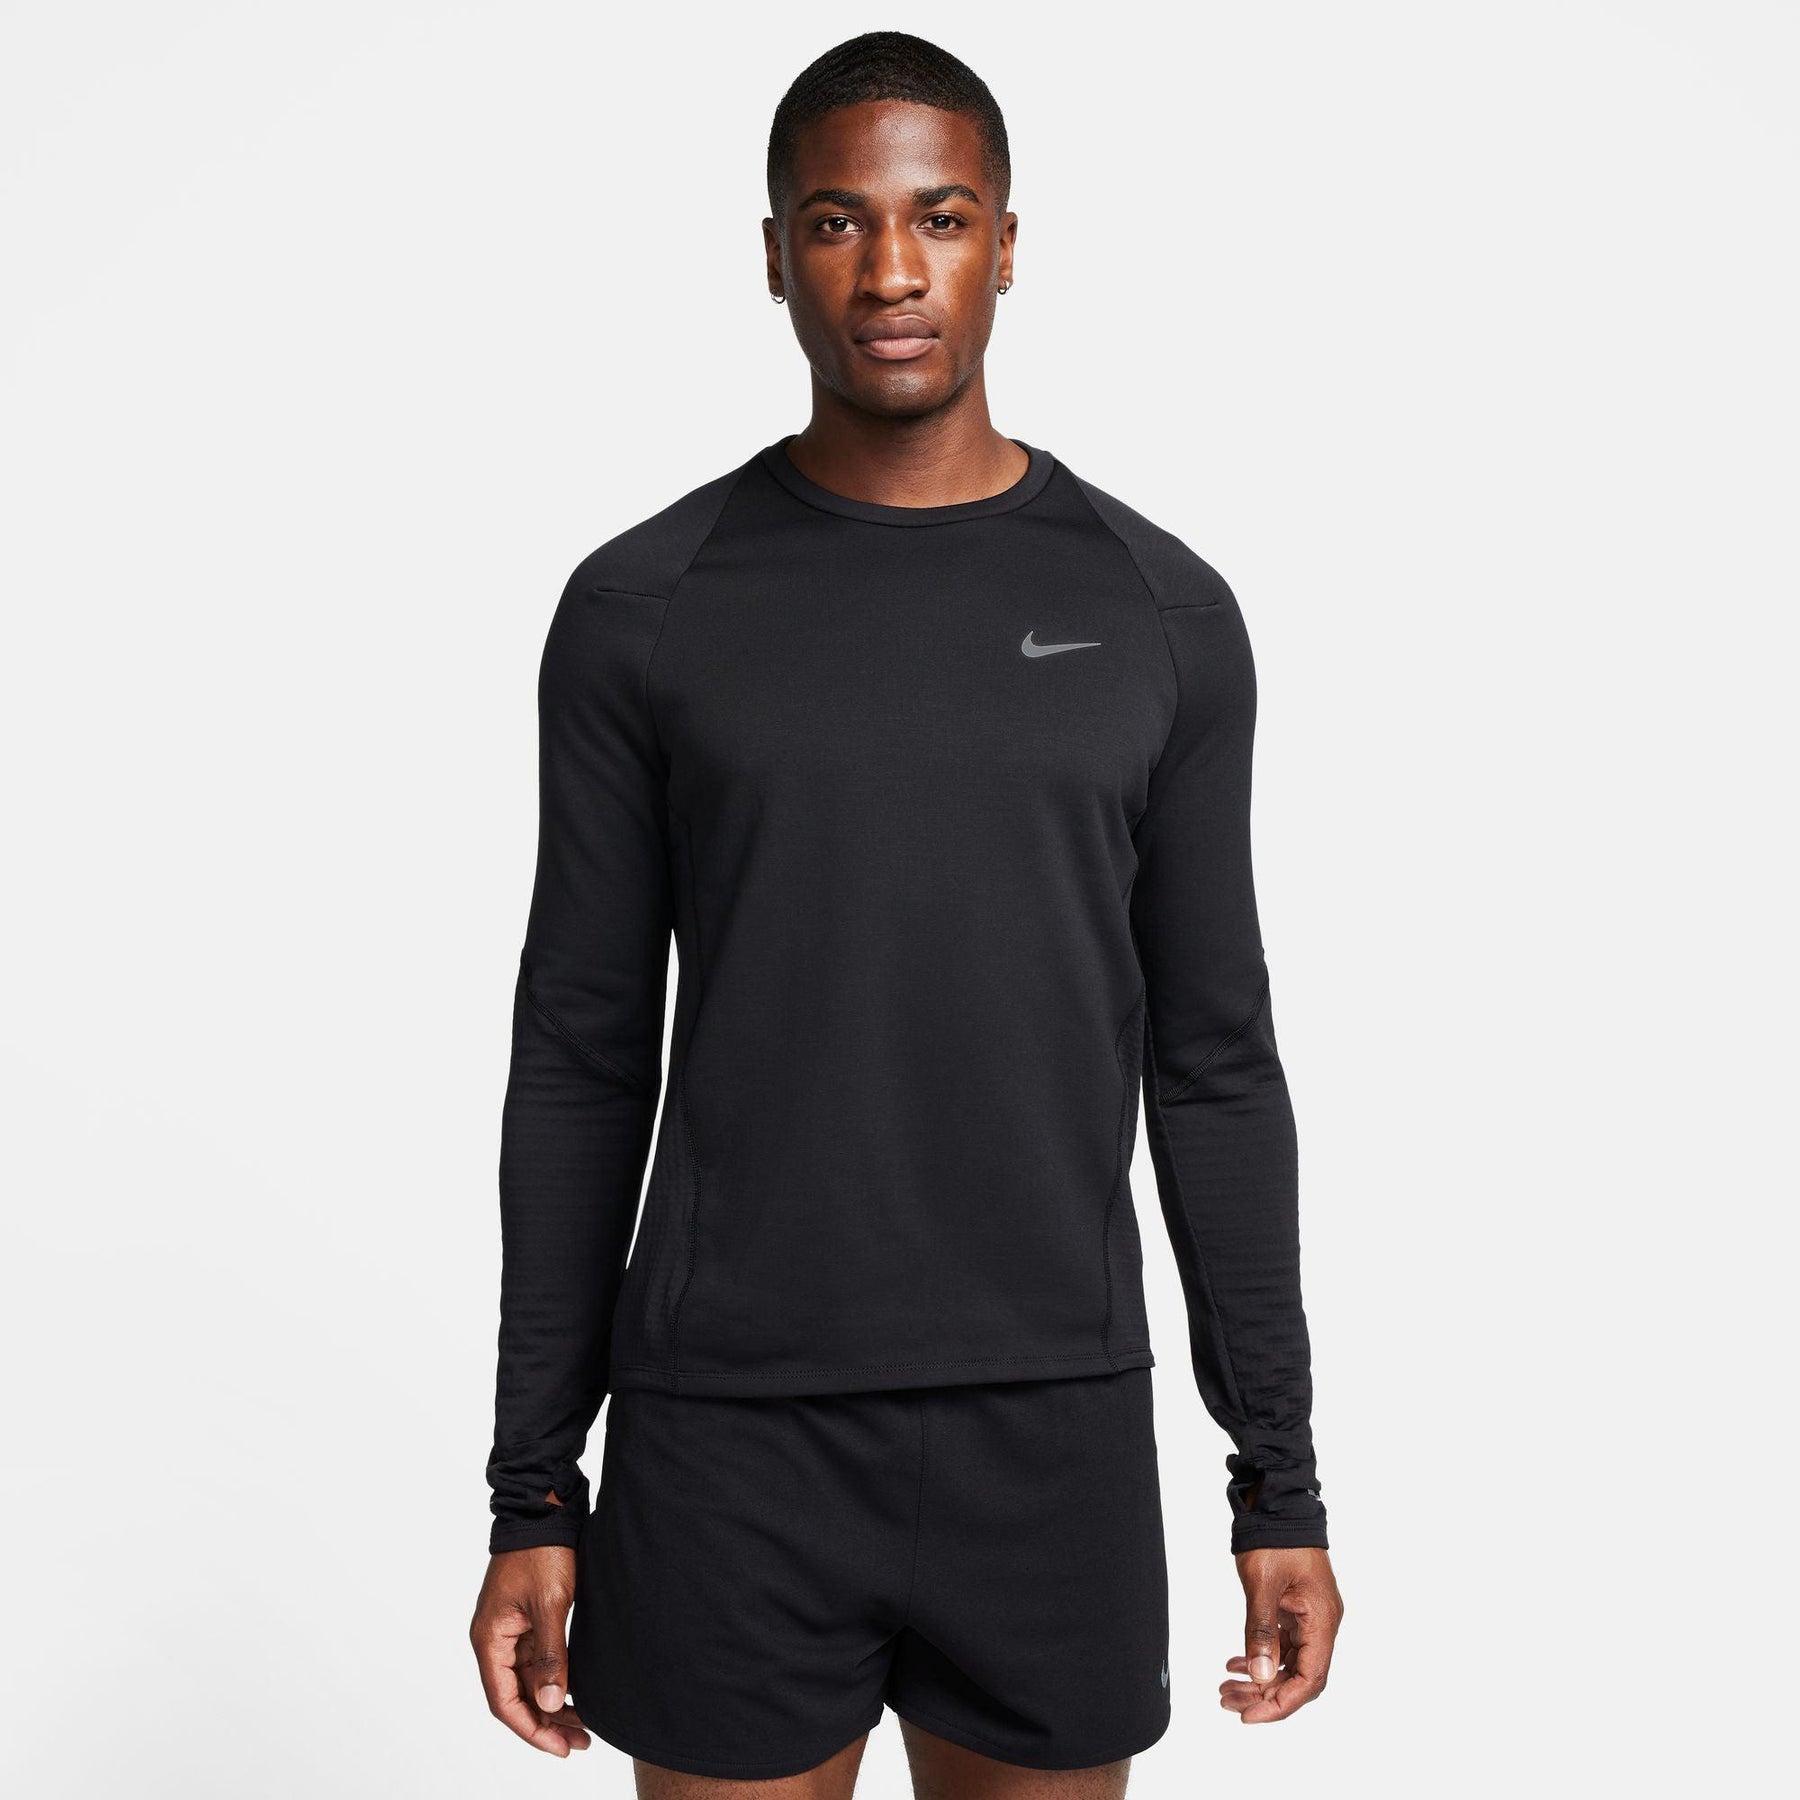 Nike-Men's Nike Element-Black/Reflective Silv-Pacers Running